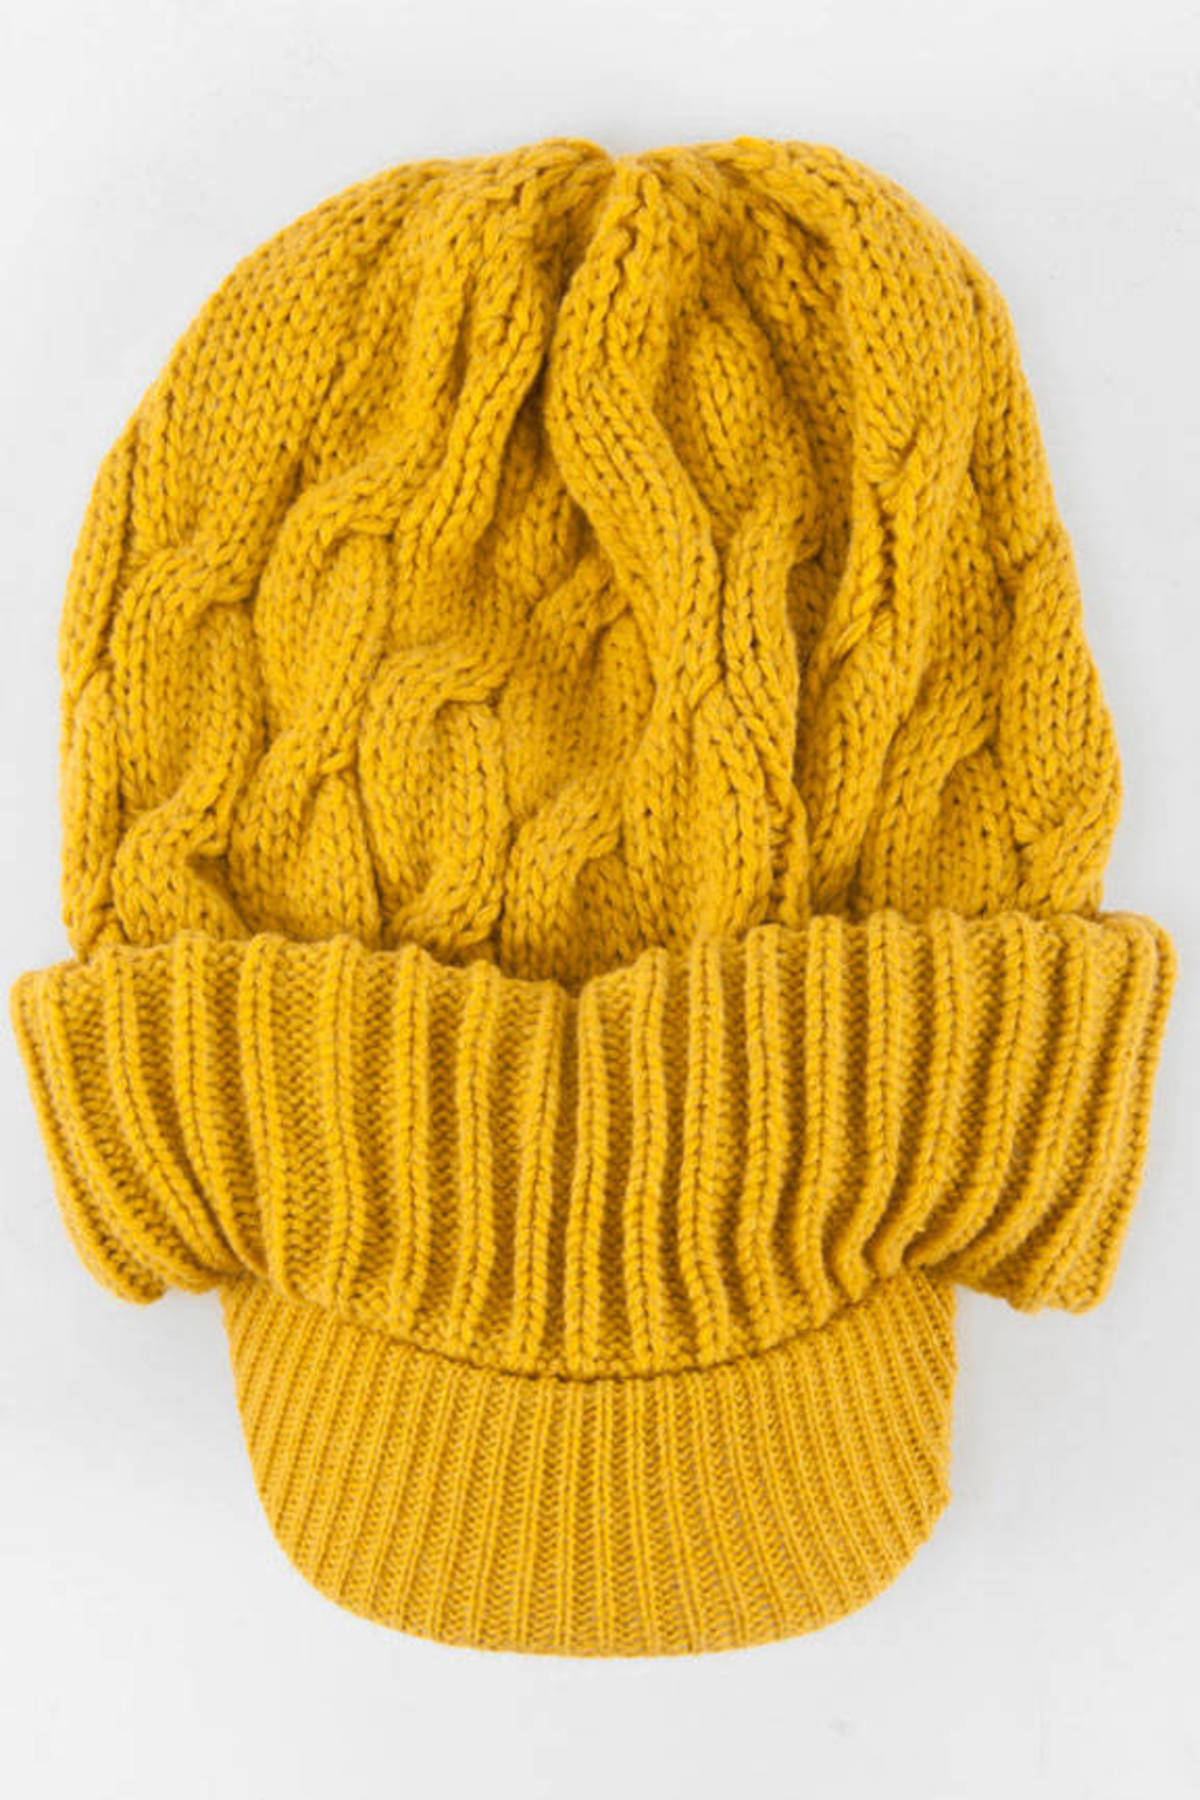 Knit Beanie Cap in Mustard - $7 | Tobi US